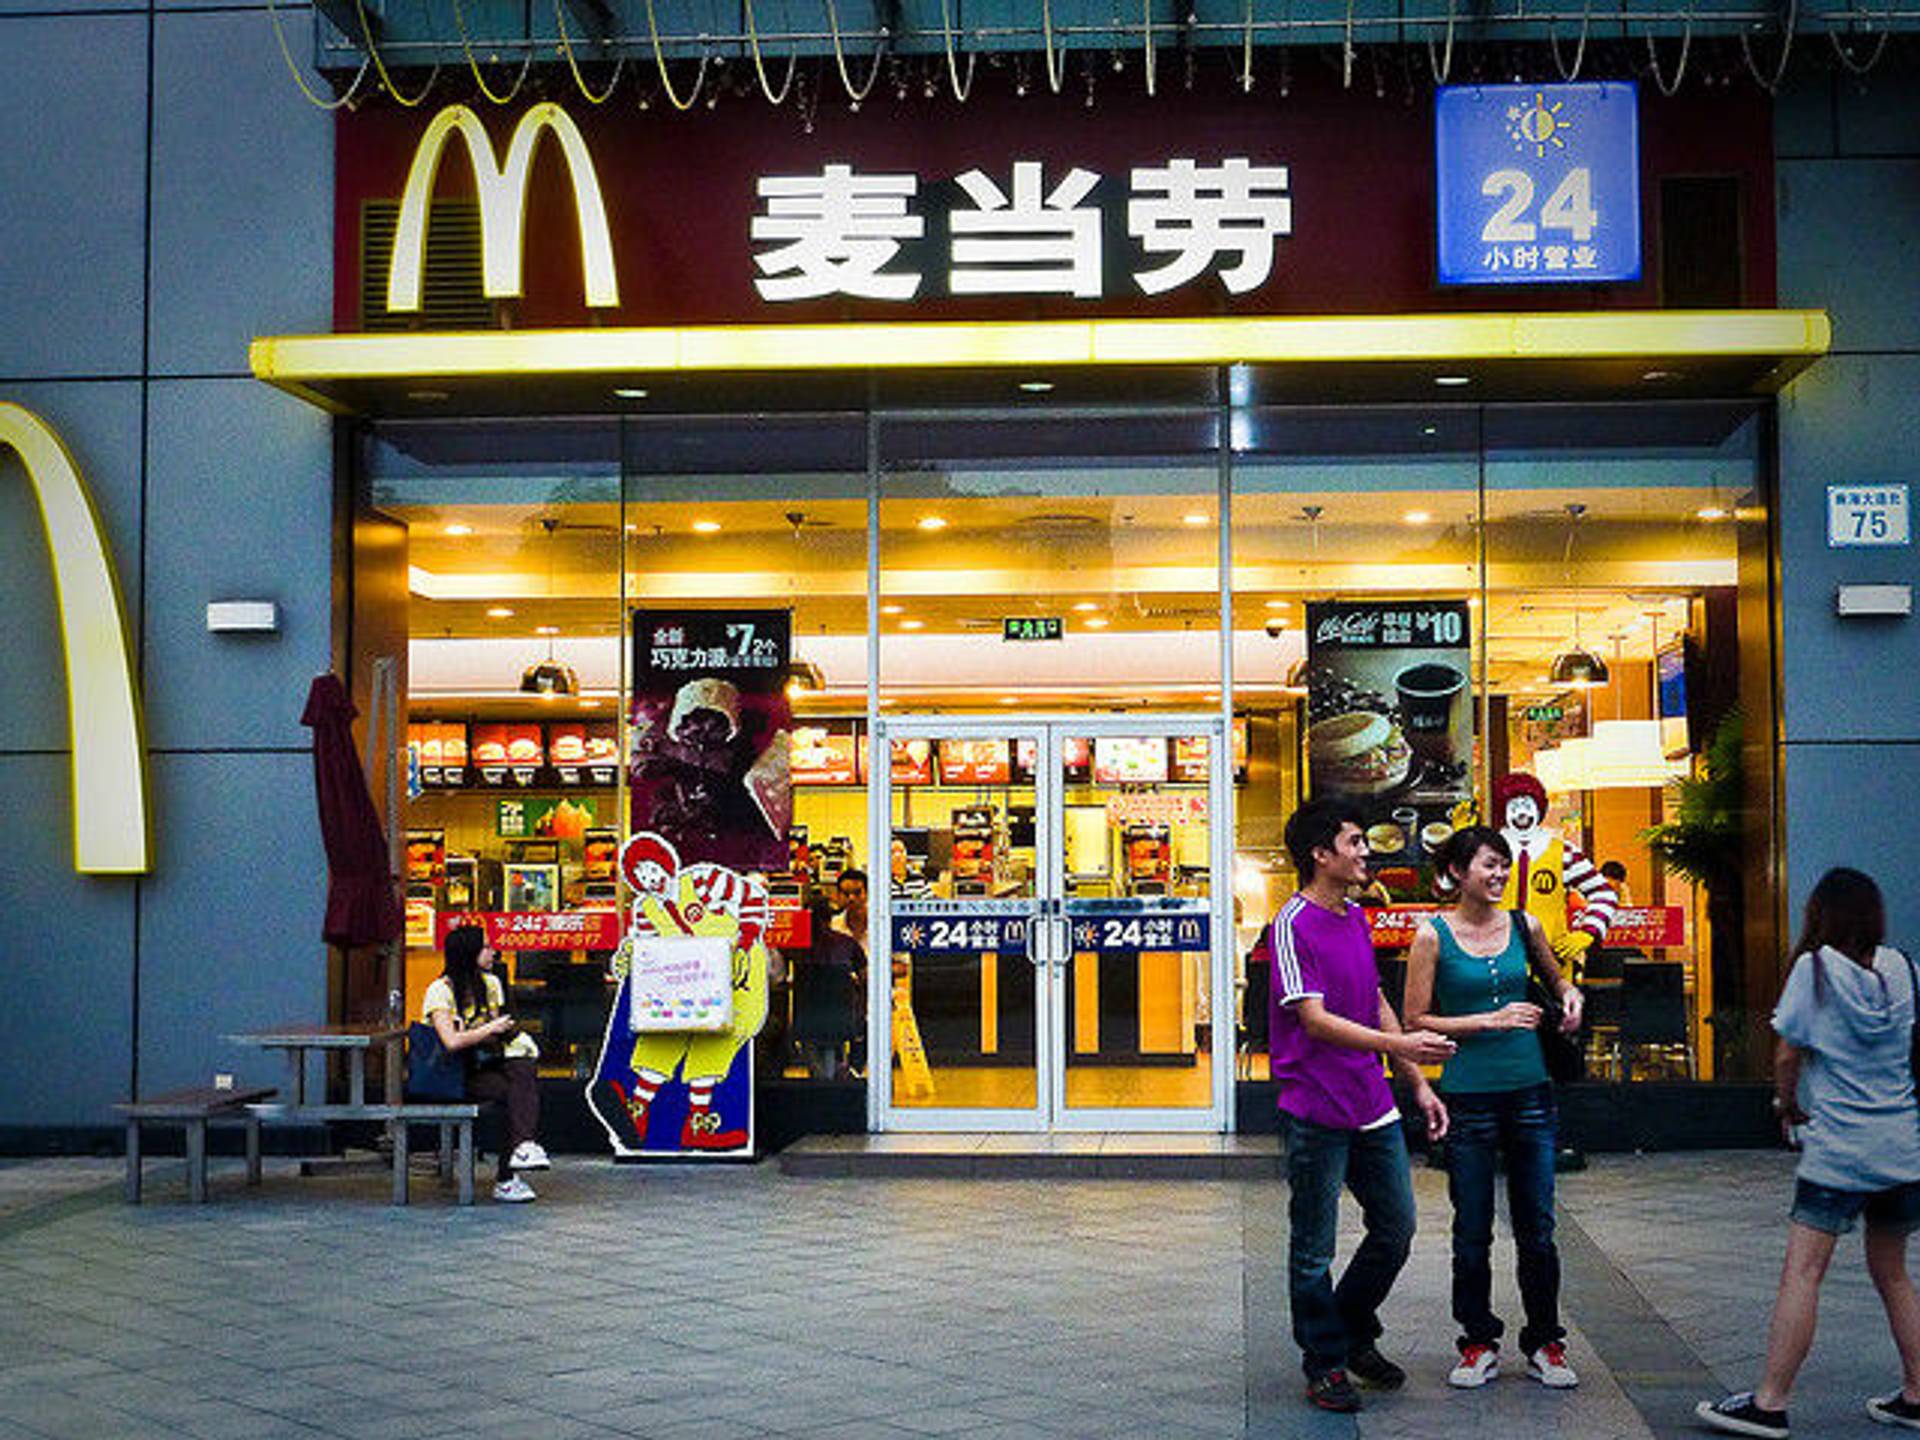 McDonald's throws Barbie parties across China